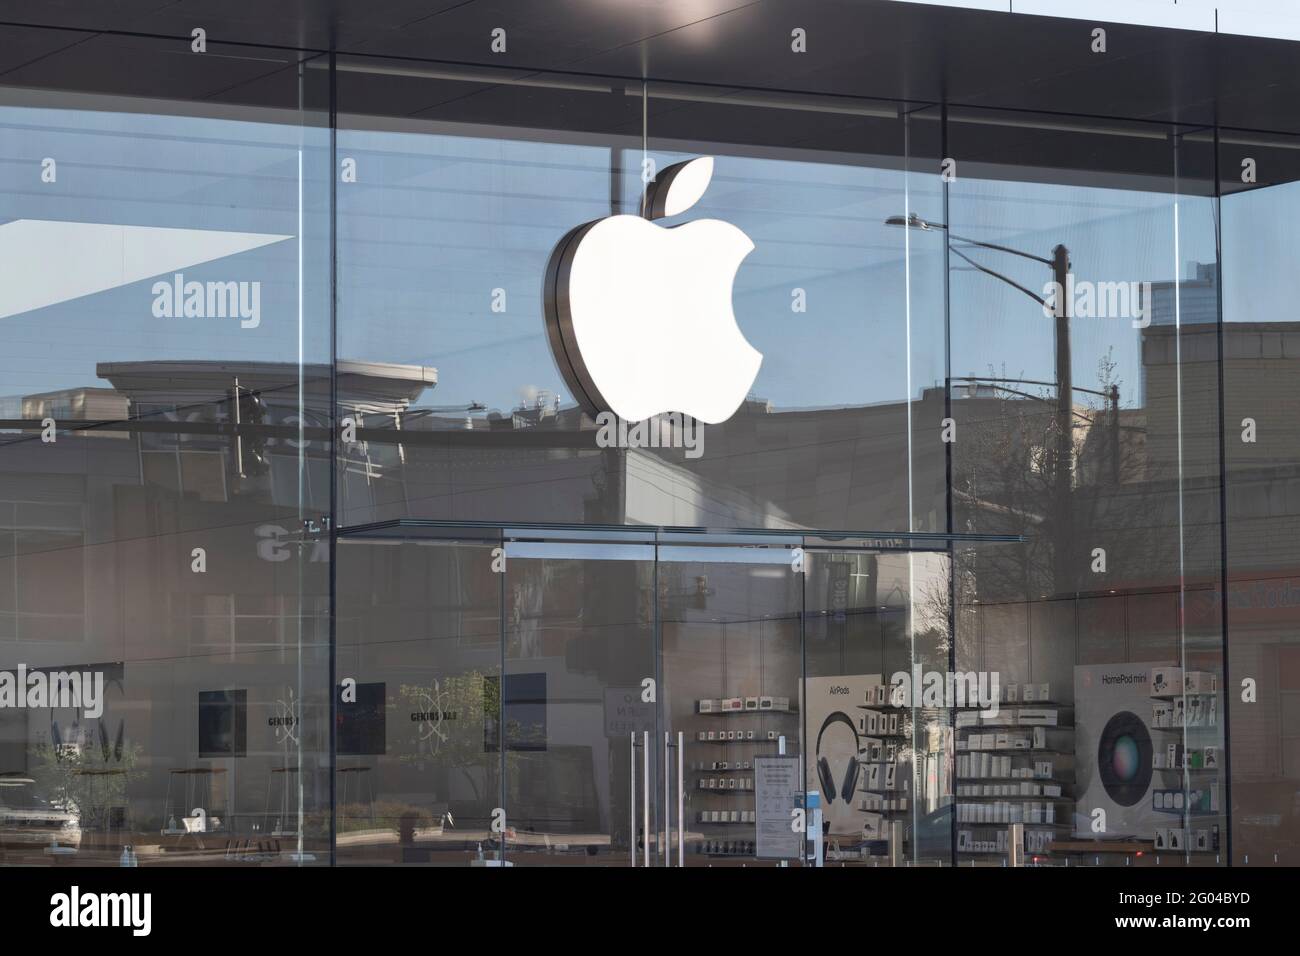 Chicago - Ca. Mai 2021: Apple Store Retail Mall Location. Apple verkauft und beliefert iPhones, iPads, iMacs und Macintosh-Computer. Stockfoto